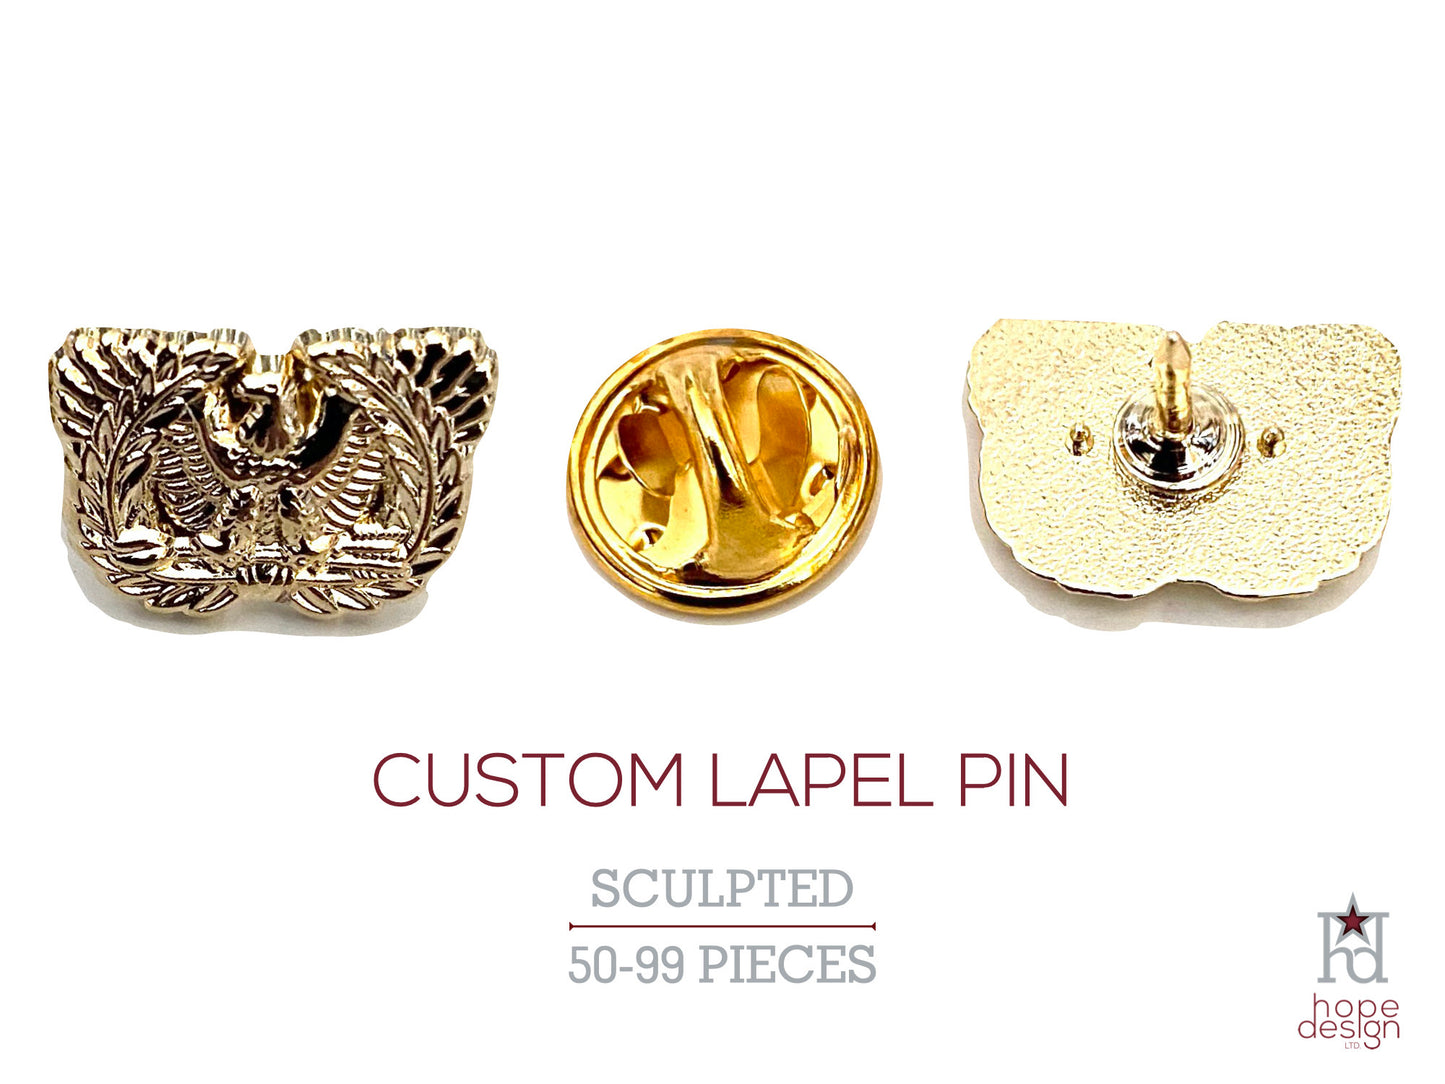 Custom Bulk Pins and Charms